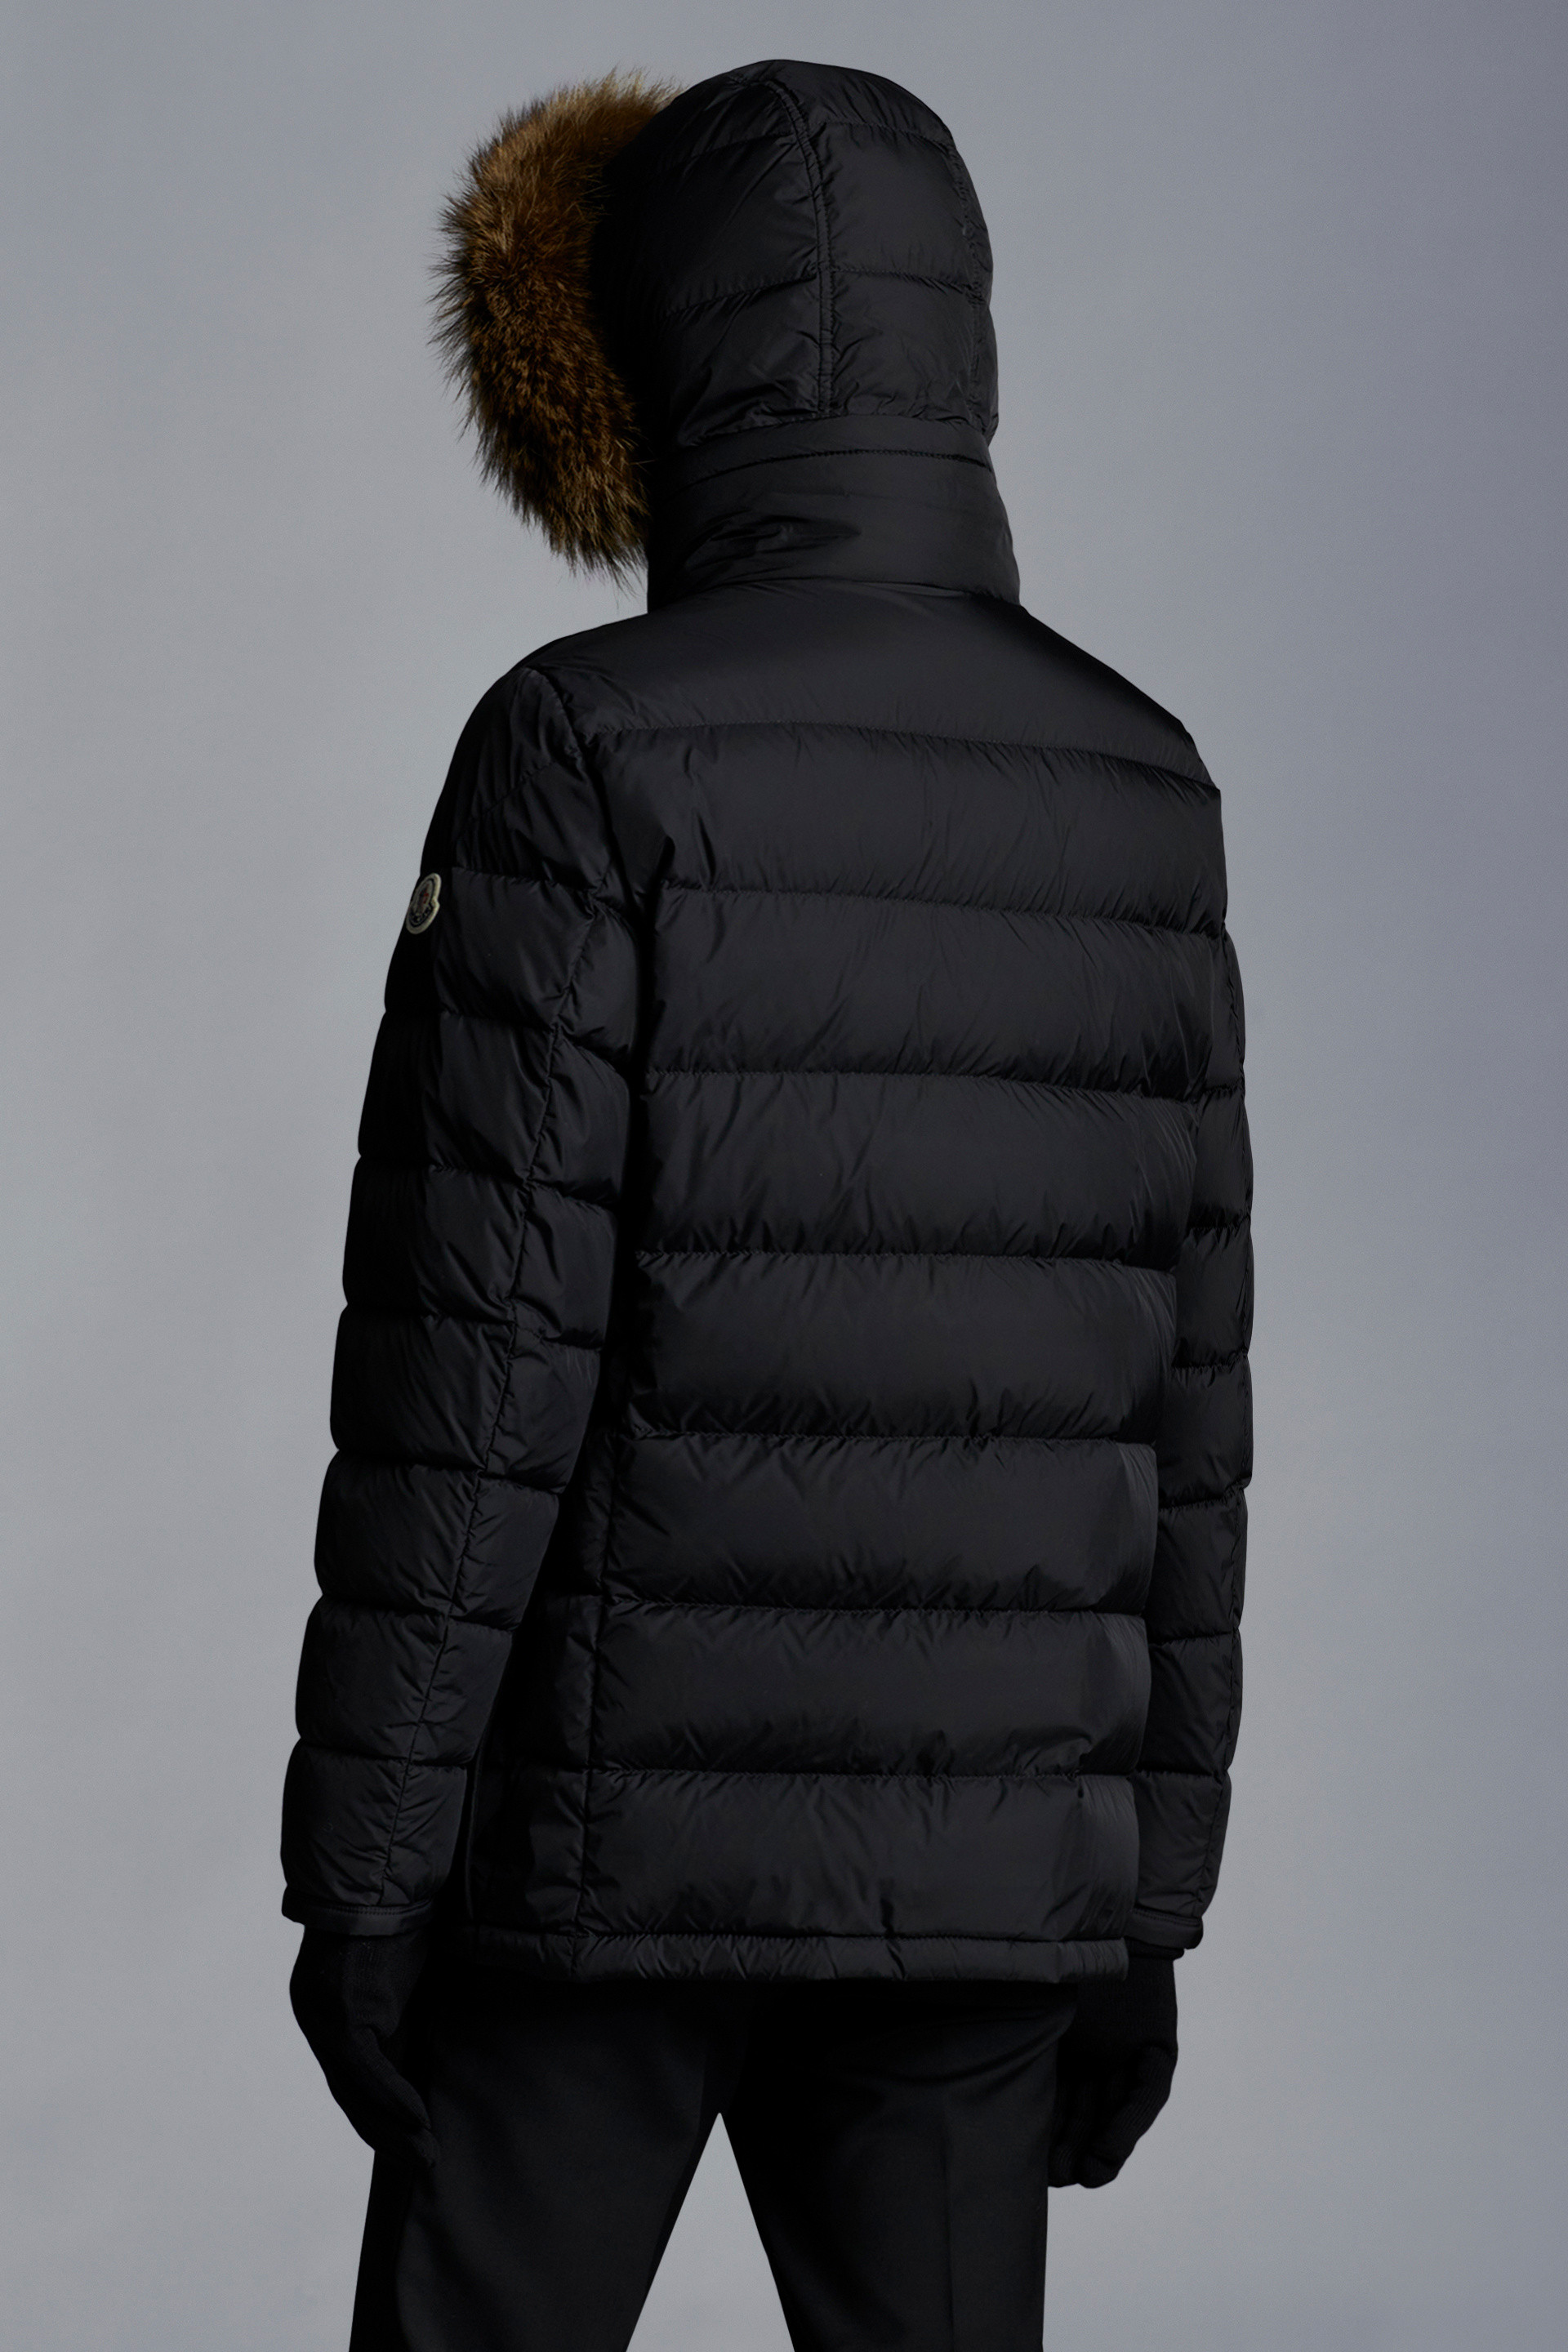 Long Down Jackets for Men - Outerwear | Moncler KR